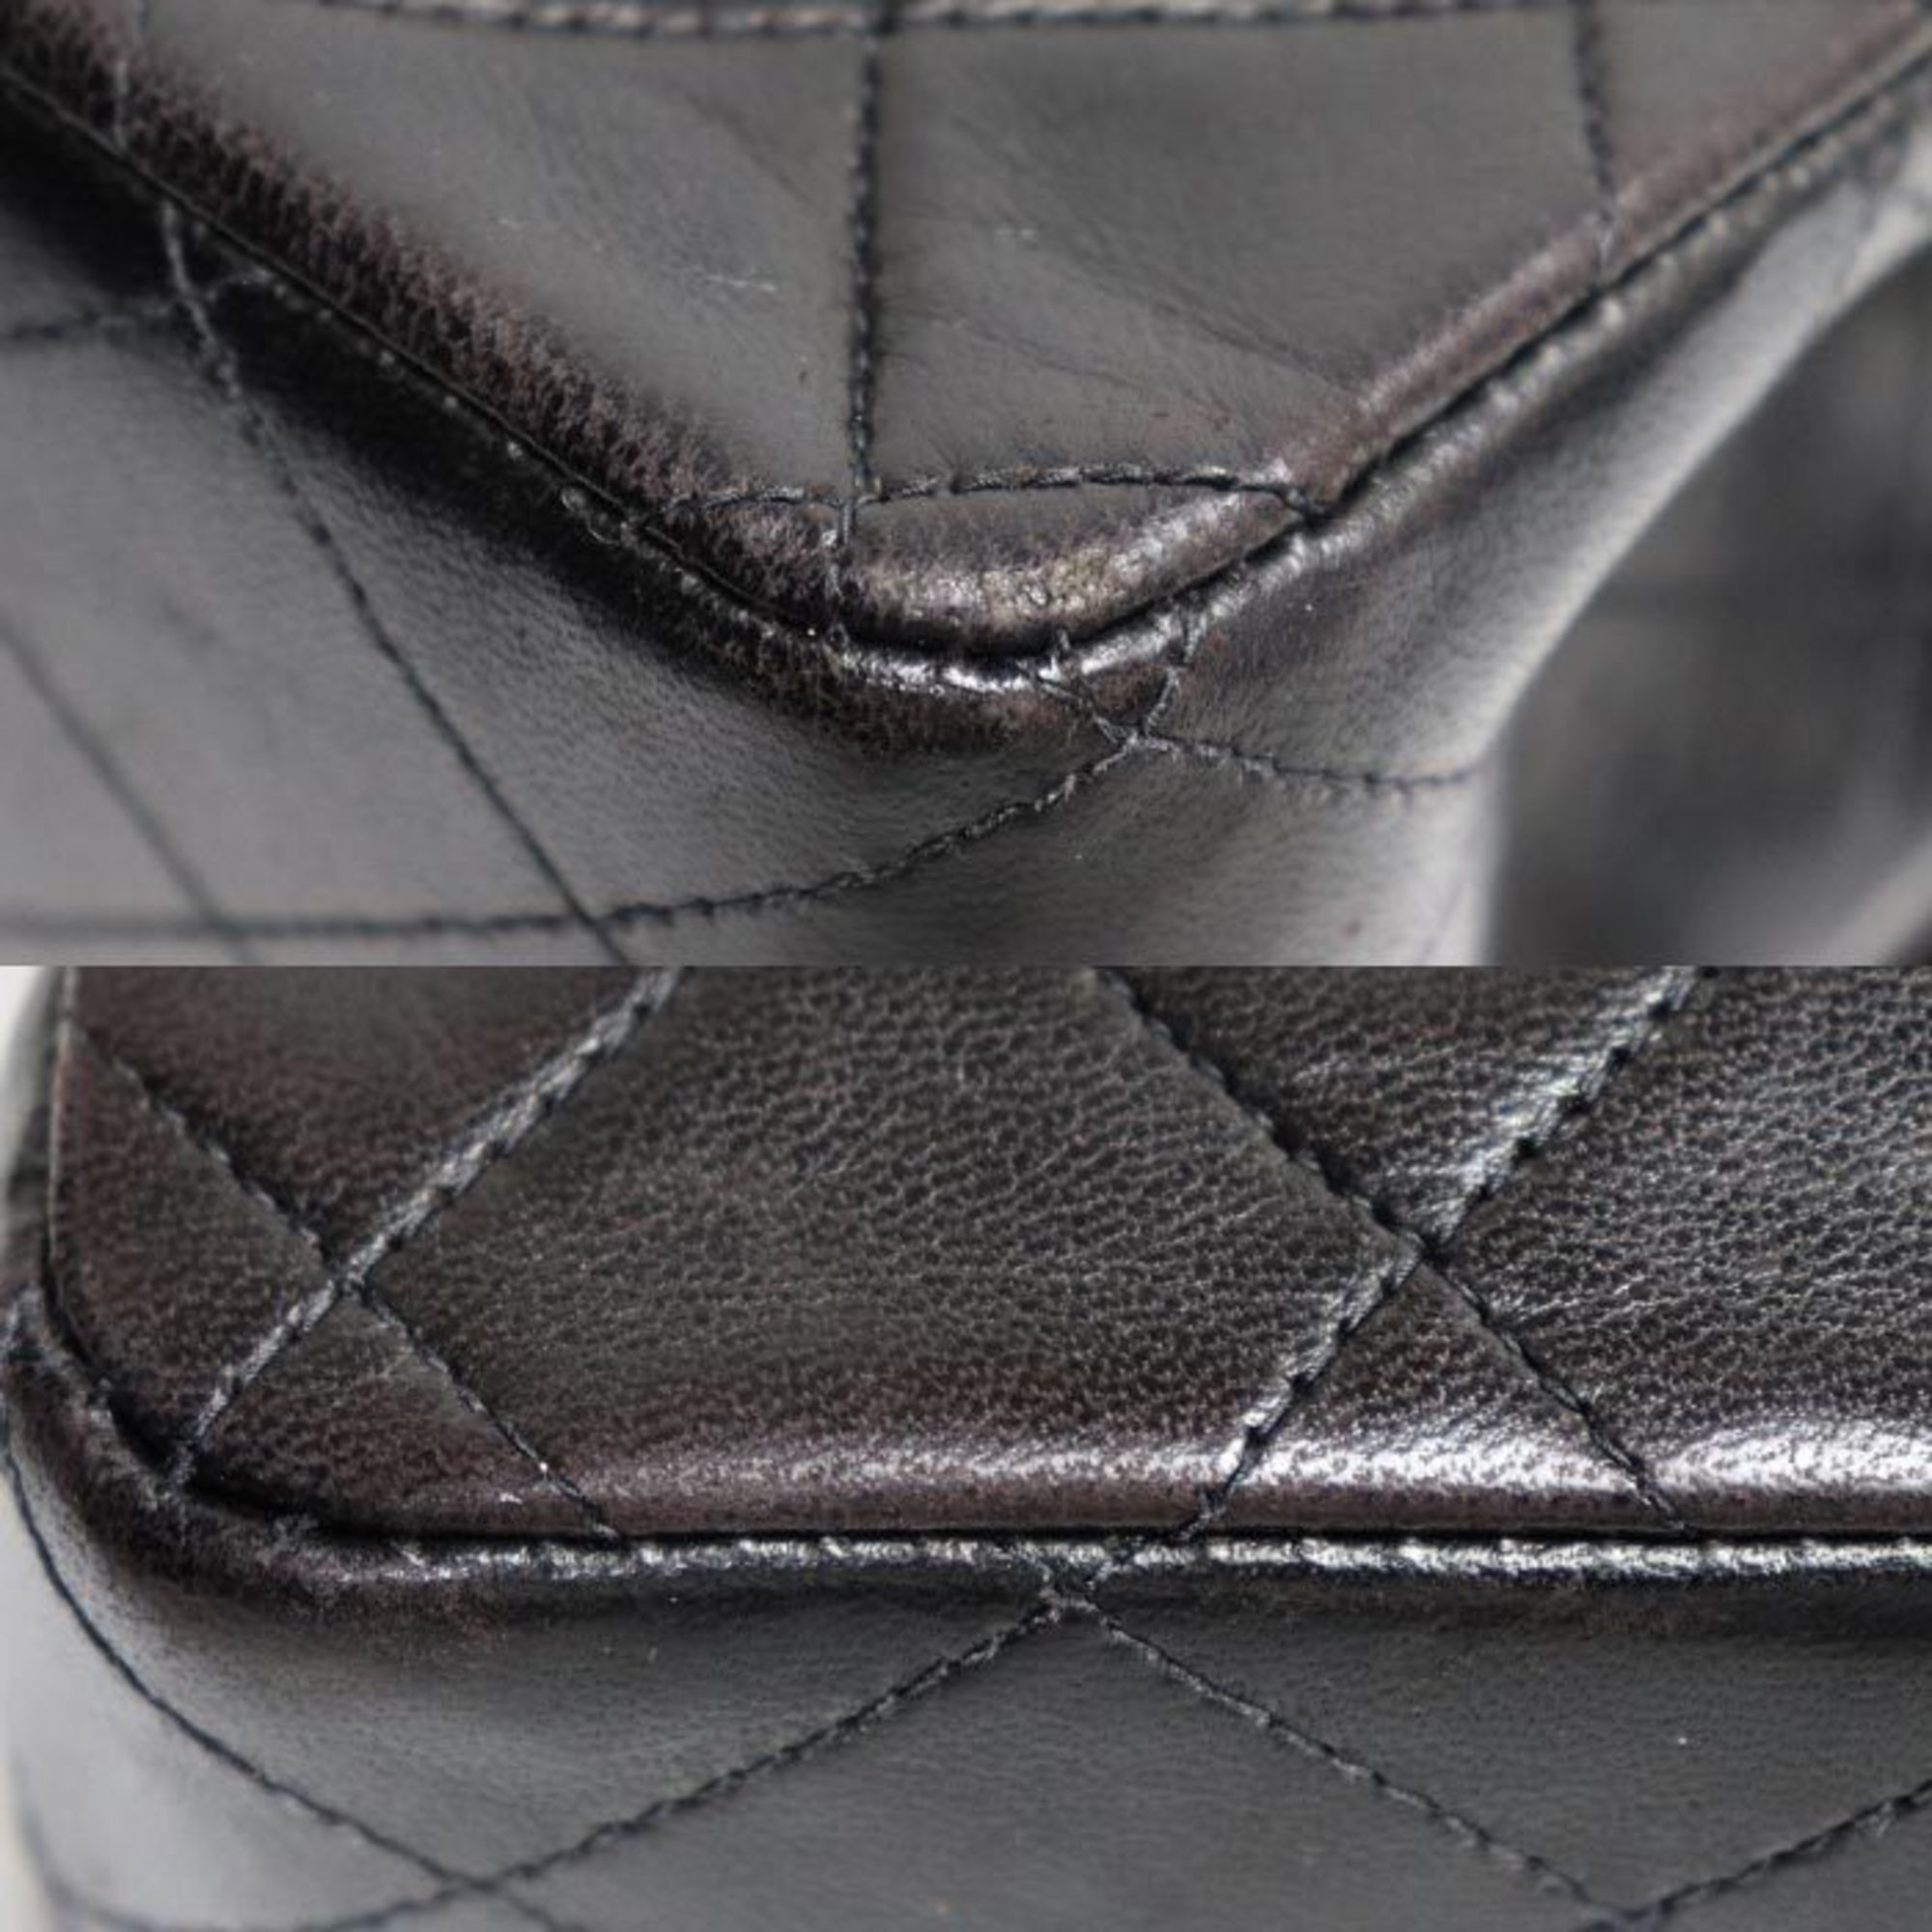 CHANEL Chanel Matelasse W-Flap Chain Shoulder Bag Black A01113 Women's